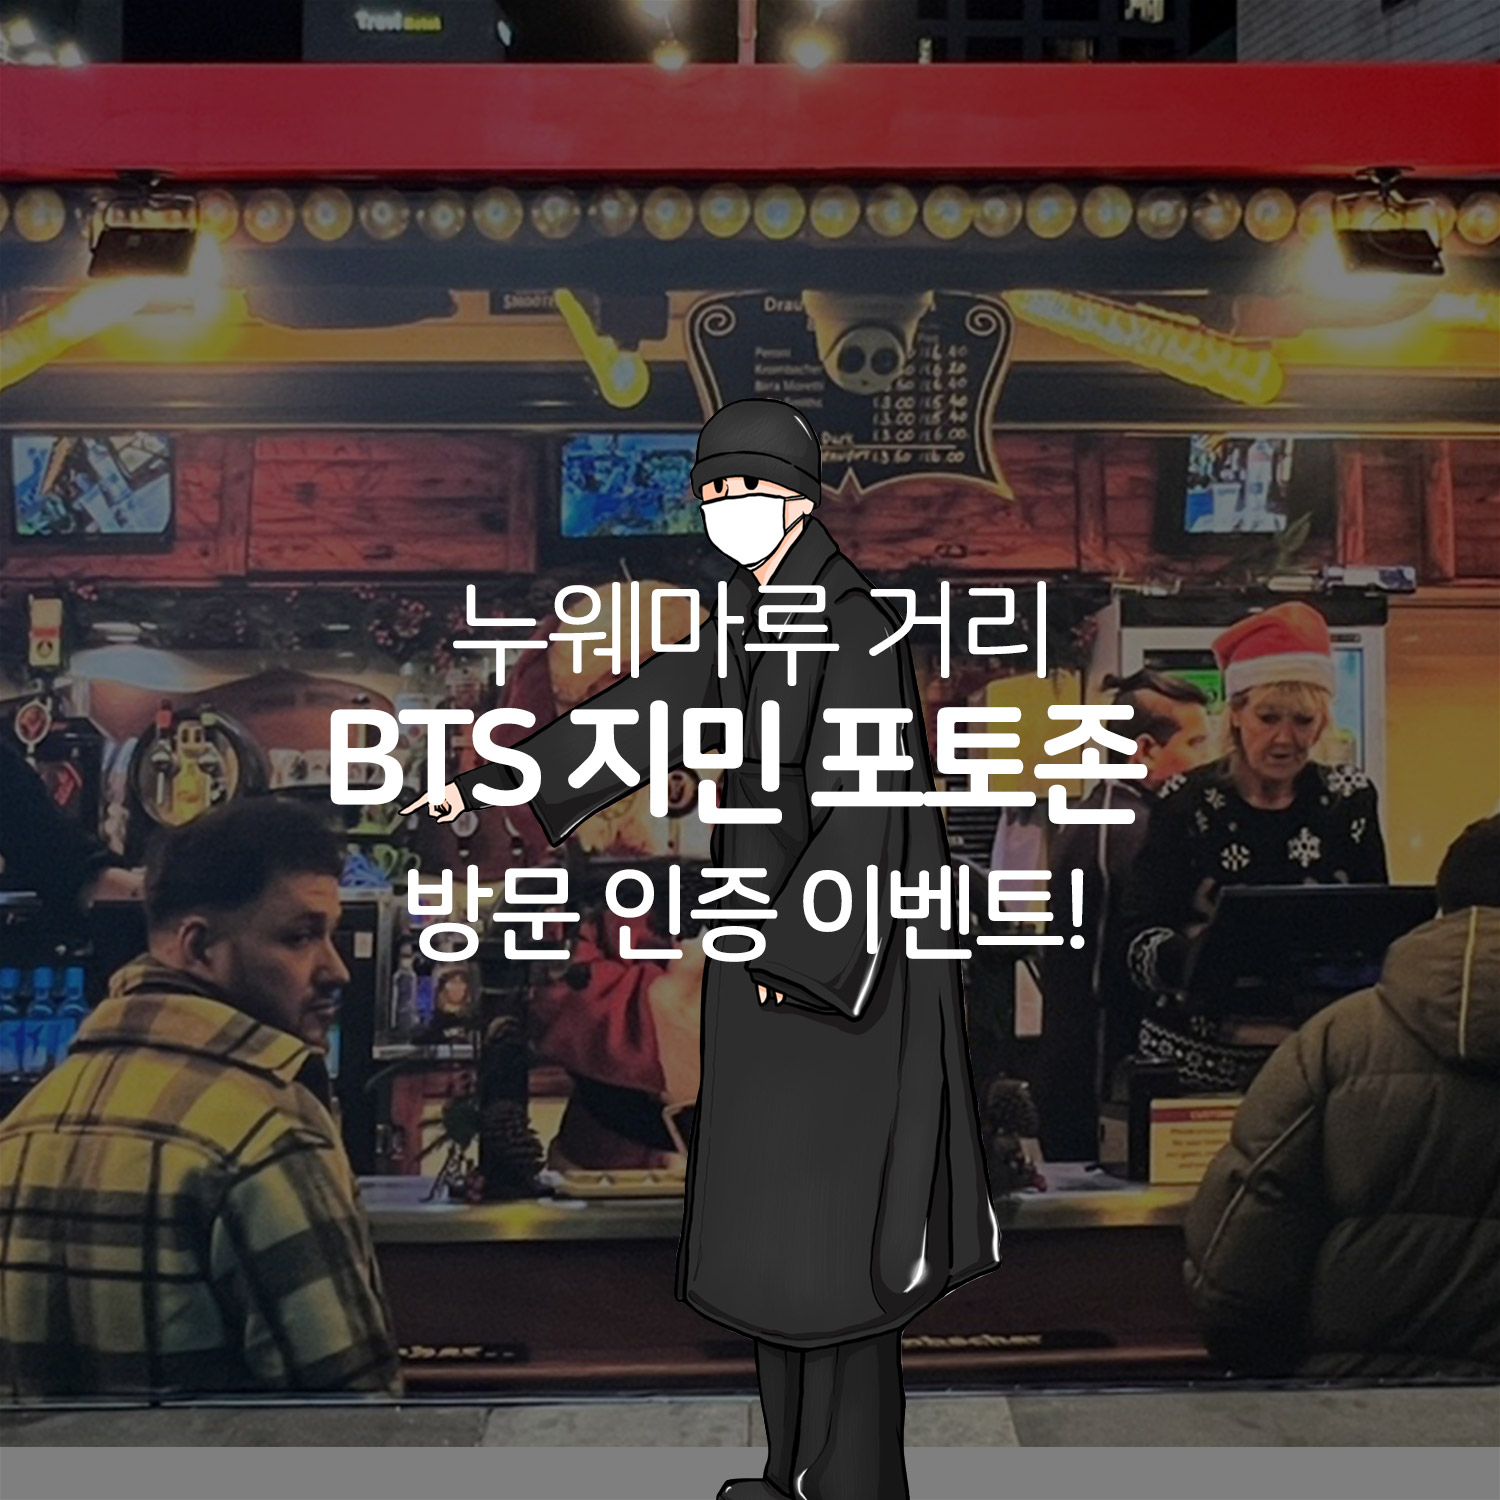 BTS 지민 포토존 방문 인증 이벤트!